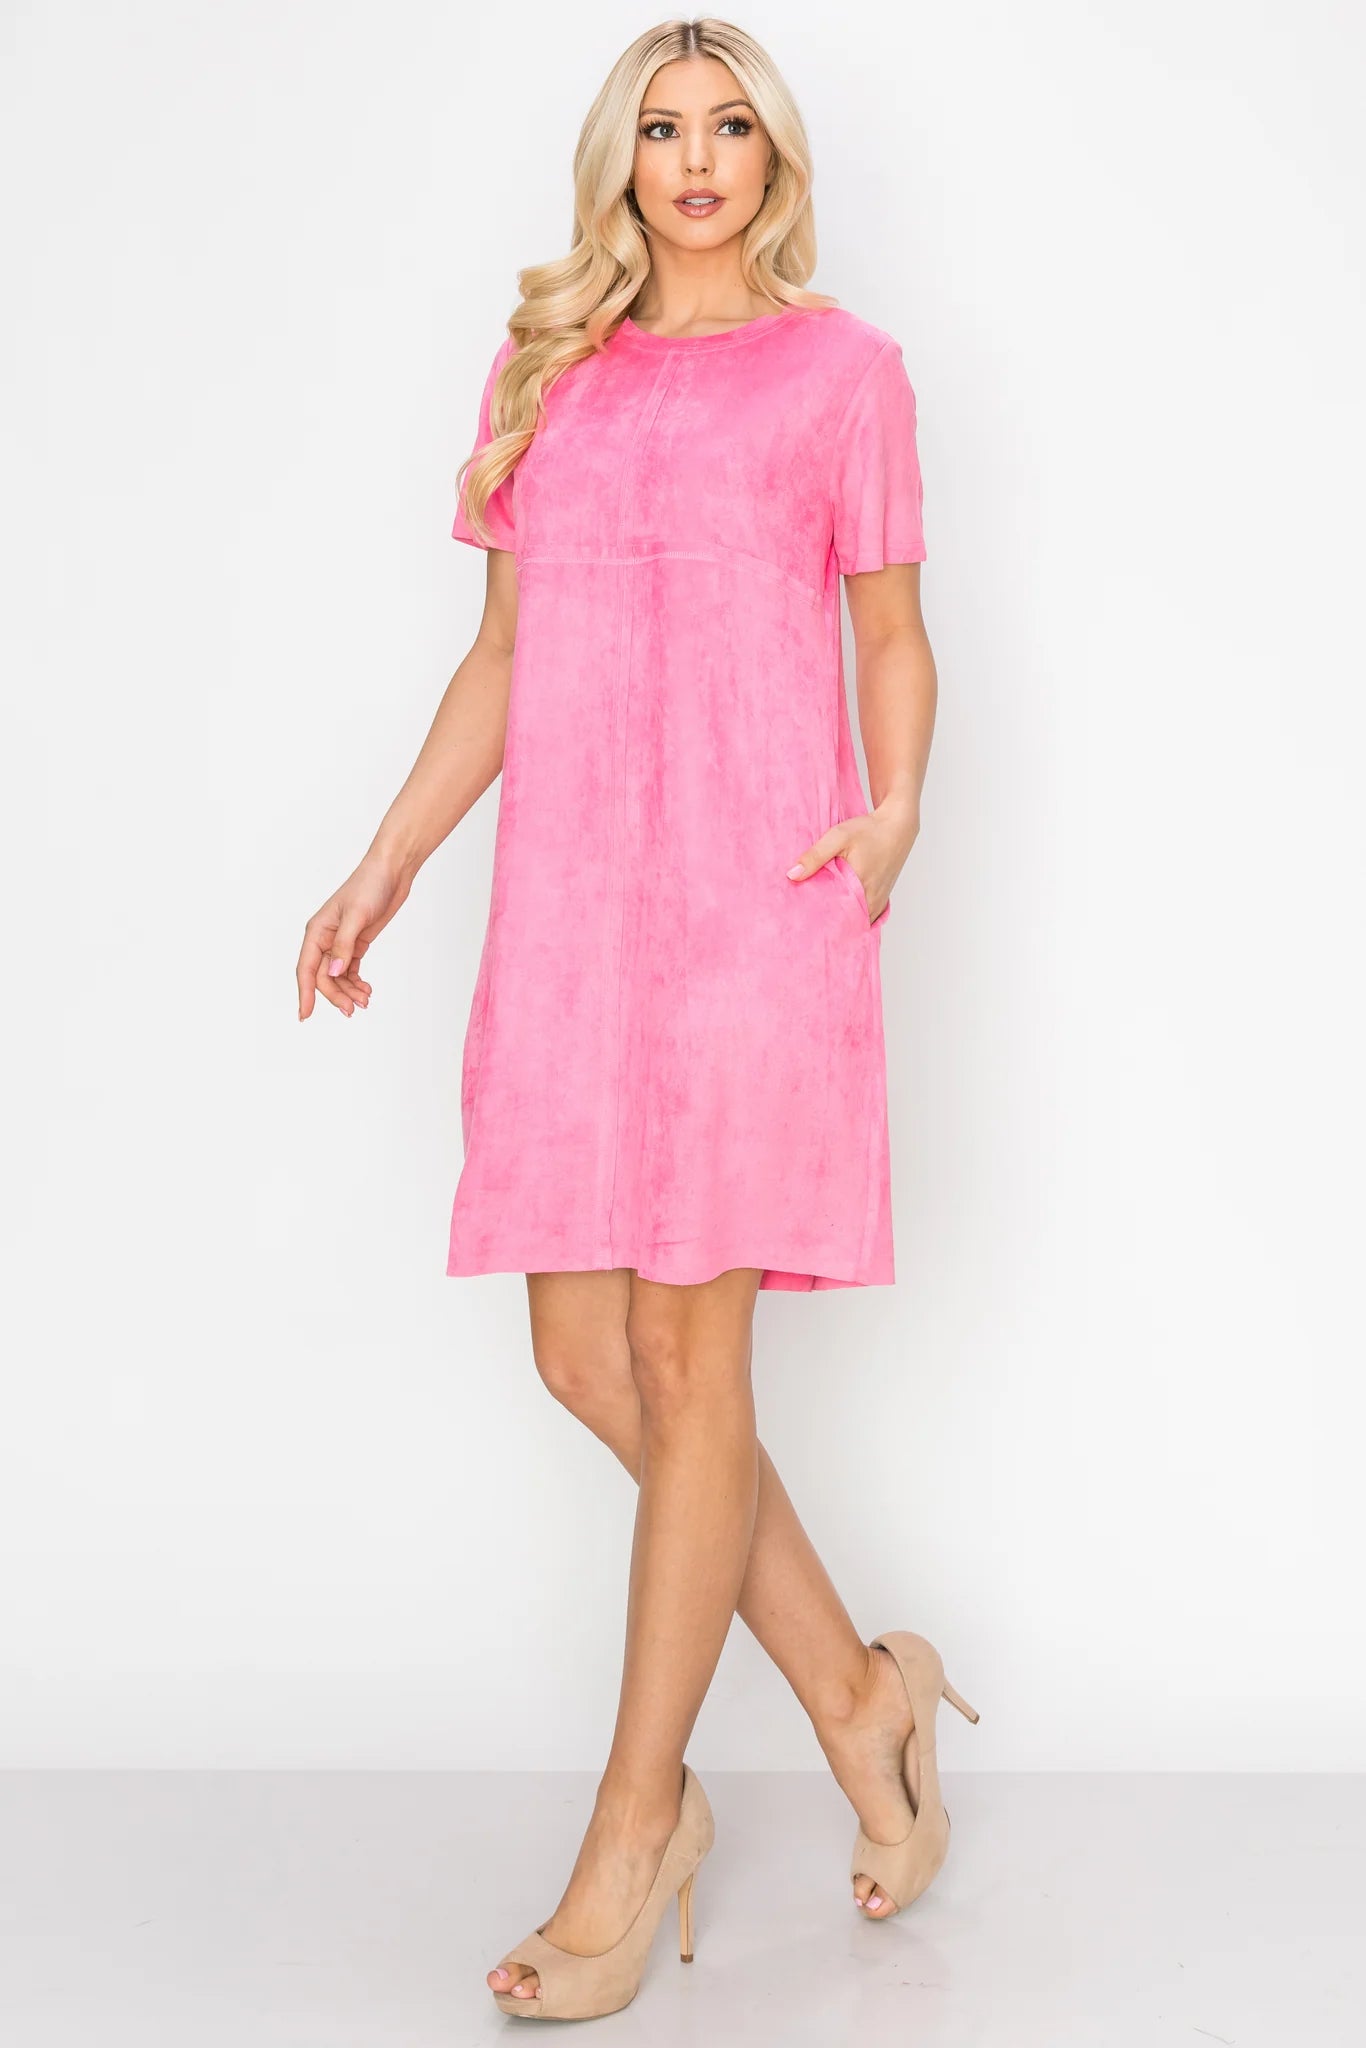 Audrey Short Sleeve Suede Dress - Fuchsia Pink Mini Dresses JOH Apparel   